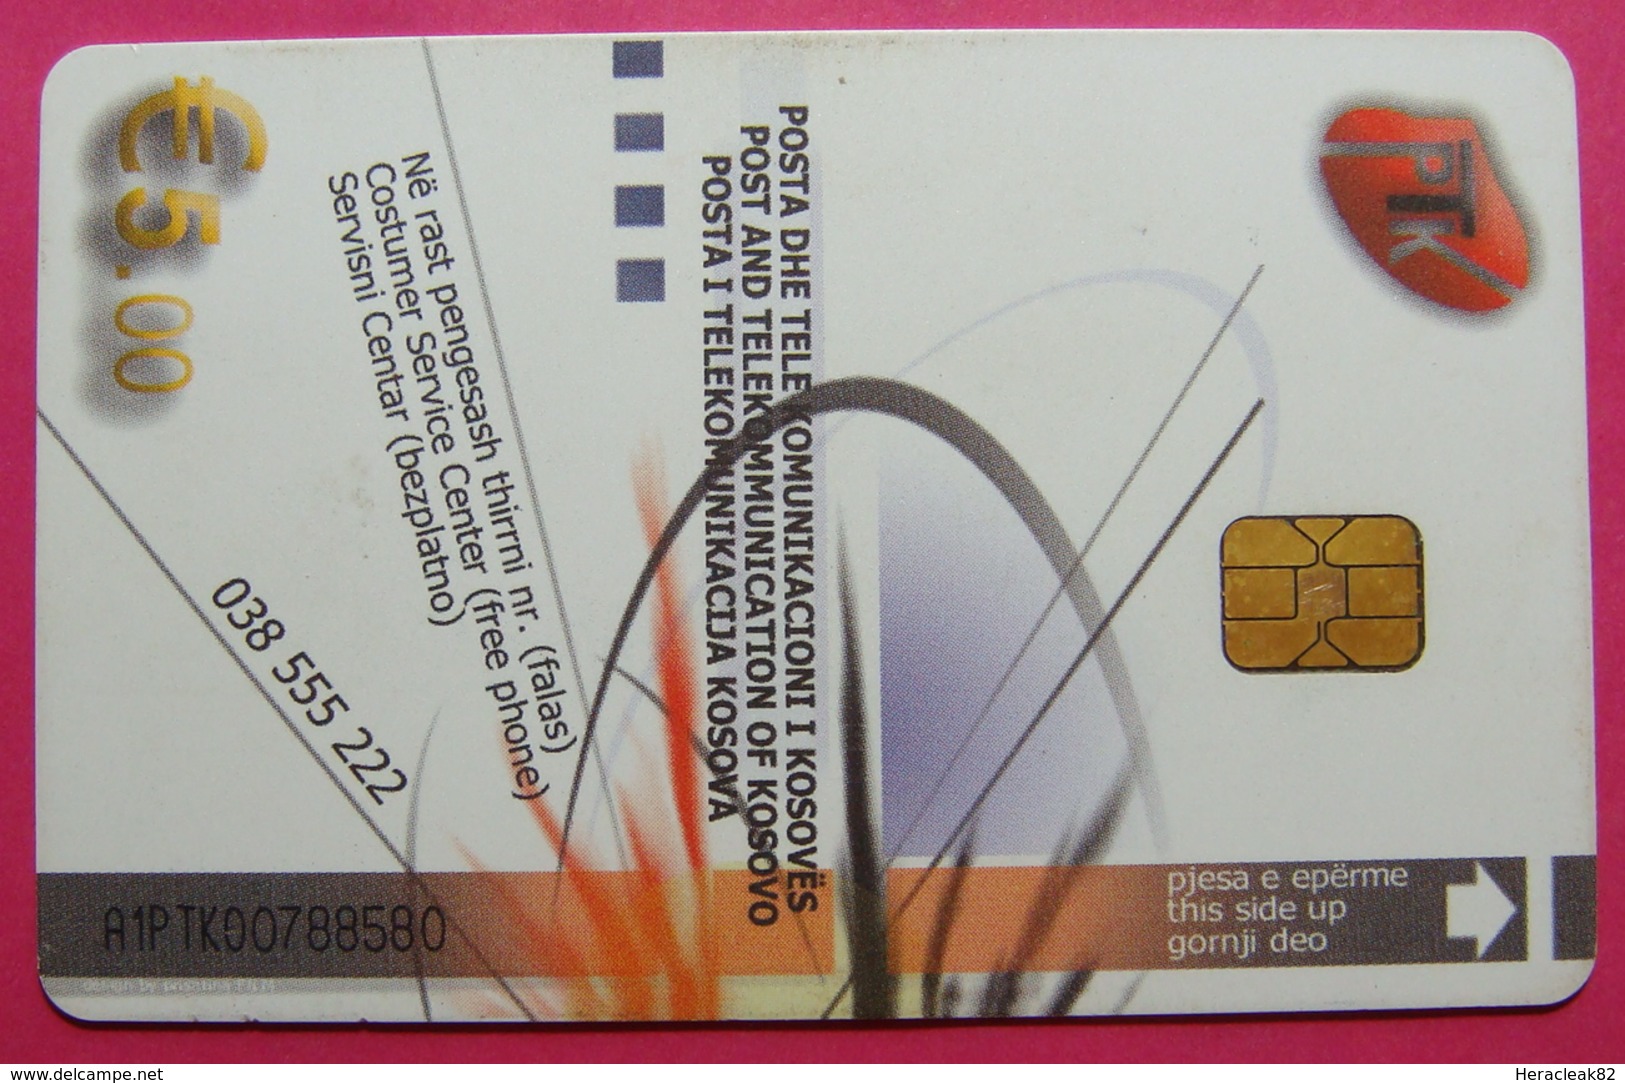 9 Edition Kosovo CHIP Phonecard, 5 Euro. Operator VALA, *Cifteli Turkish Instrument*, RARE, A1PTK 00788580 - Kosovo